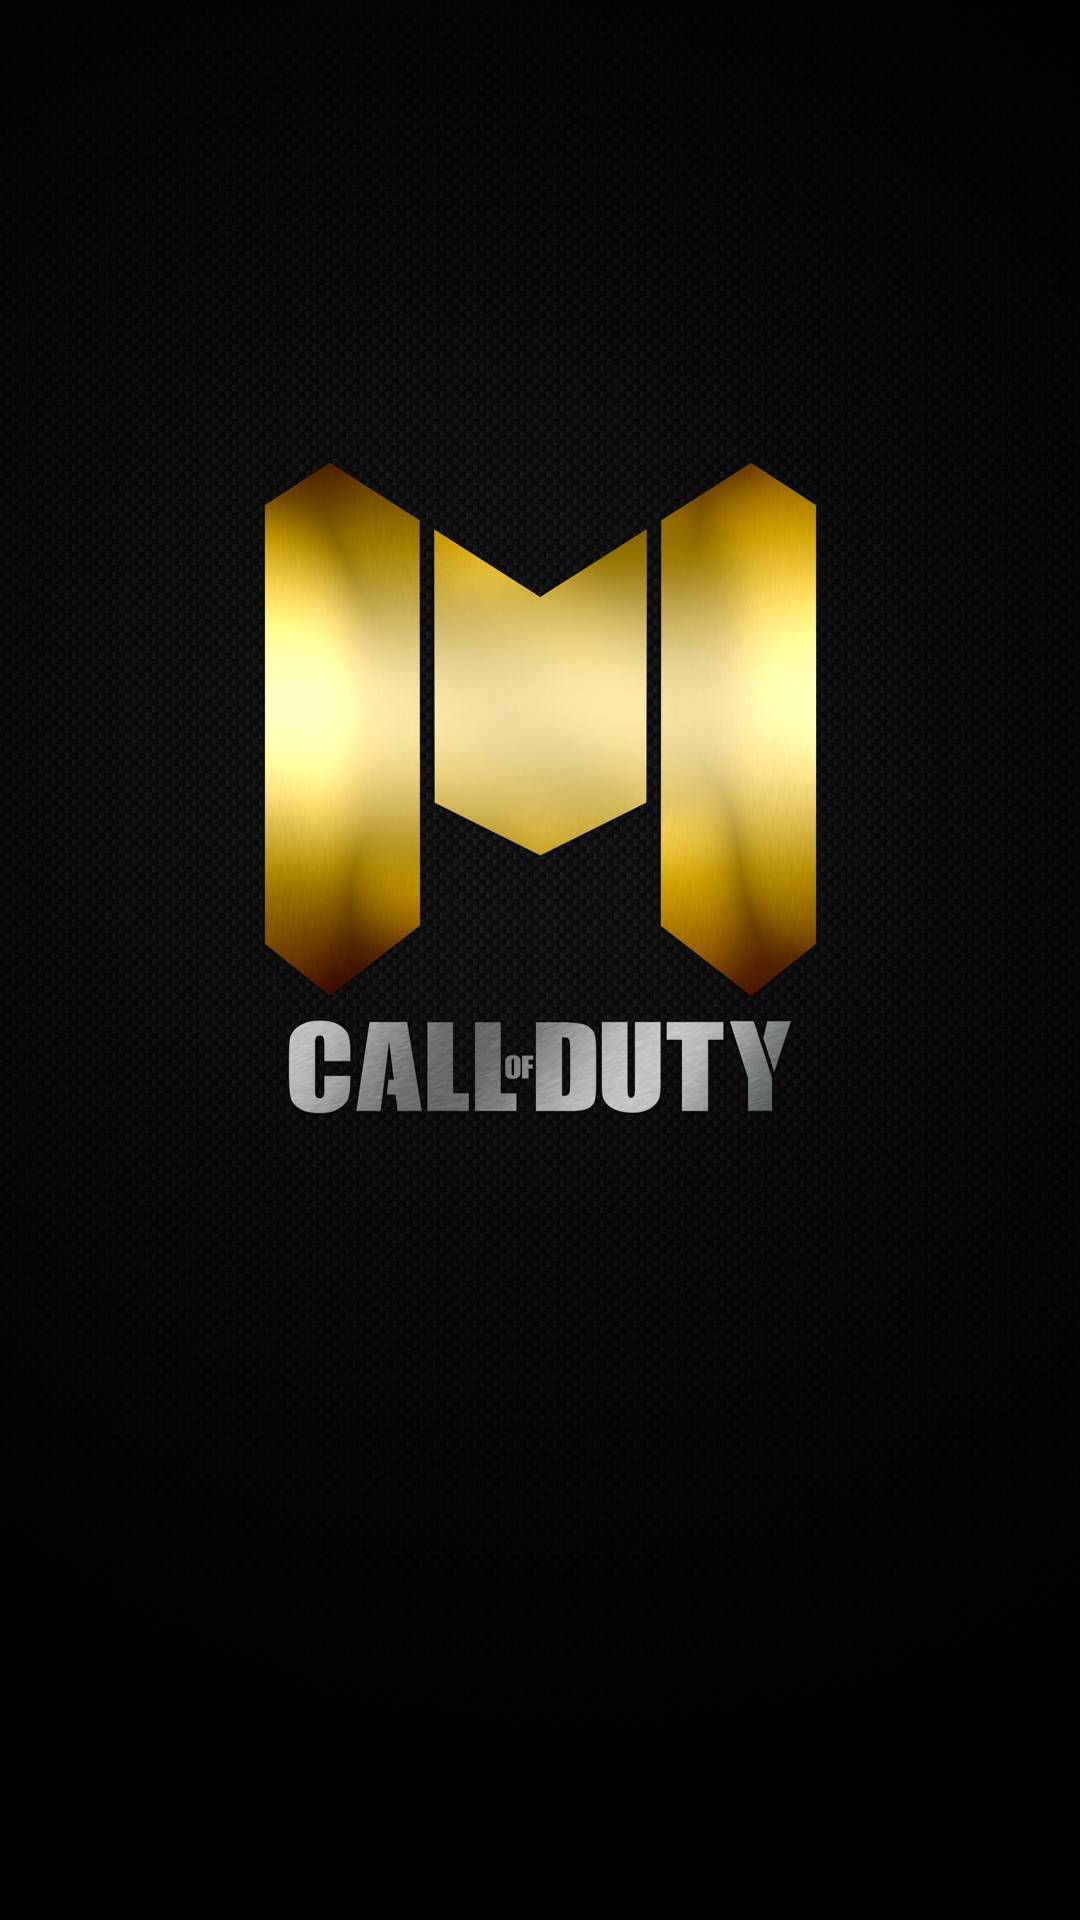 Call Of Duty Mobile Wallpaper Mobile. Call of duty, Mobile logo, Best gaming wallpaper